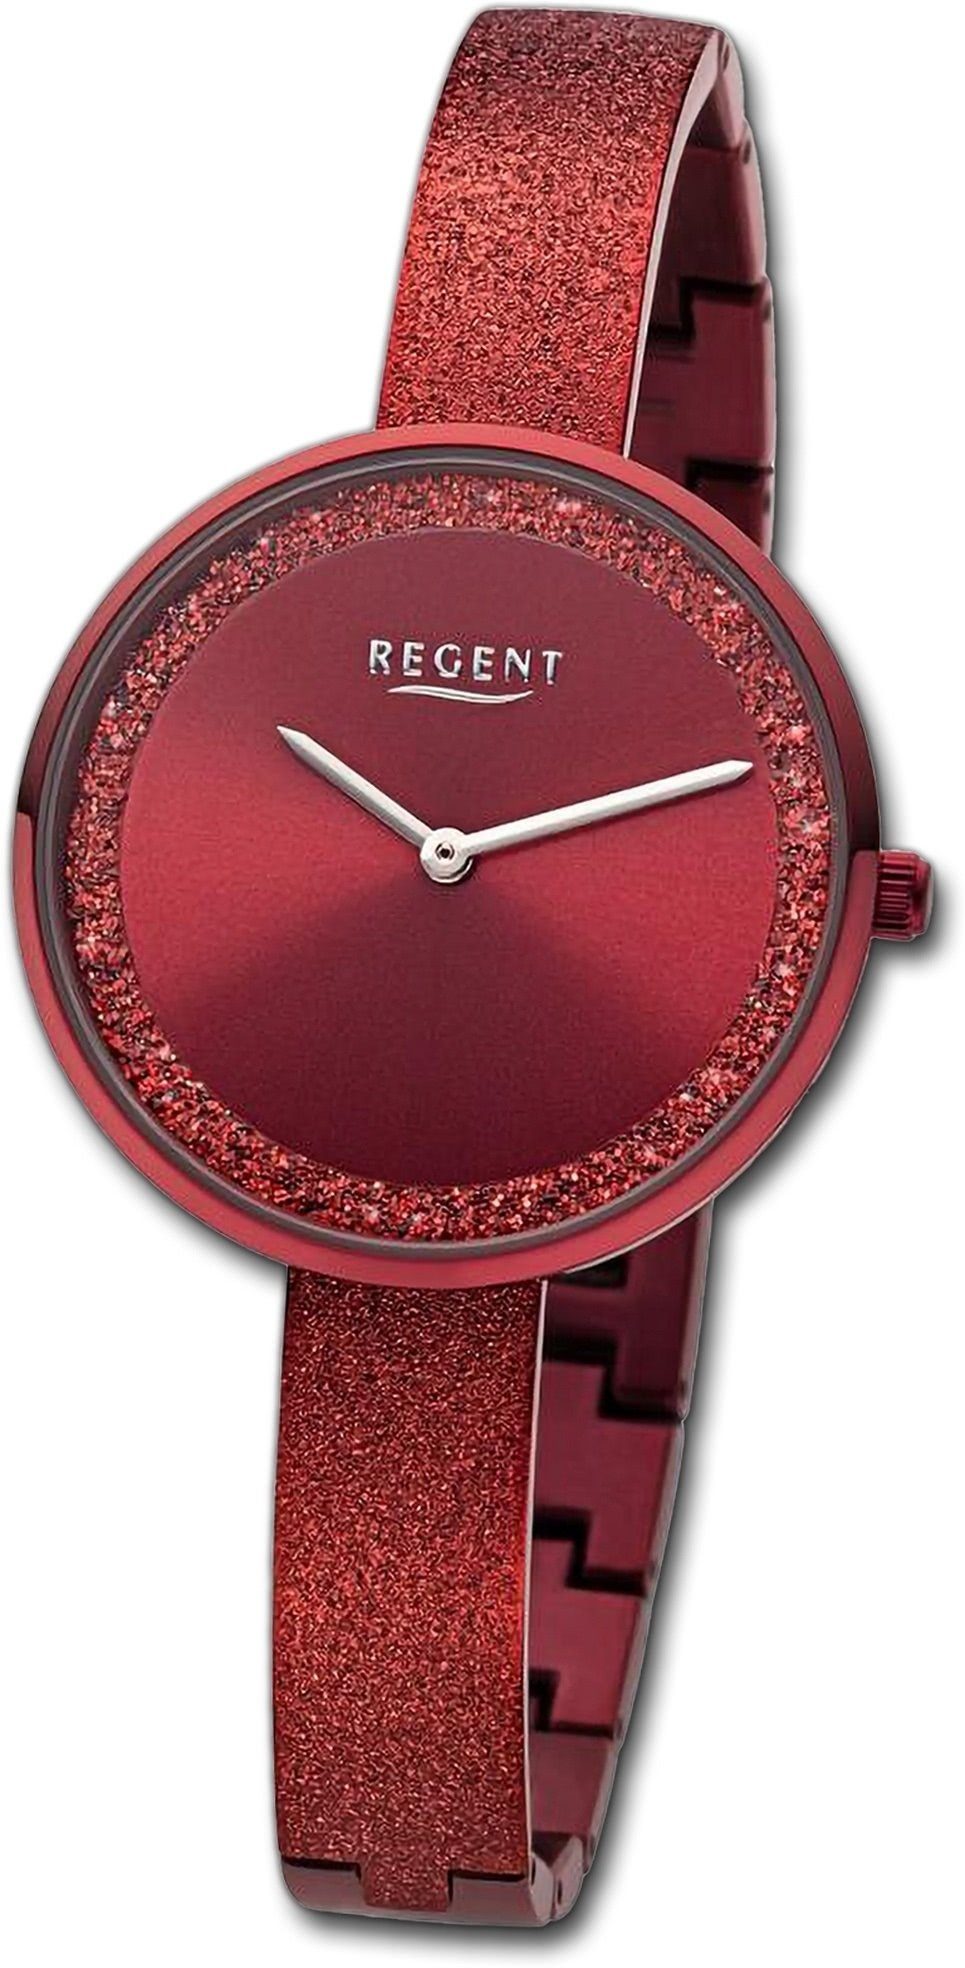 Regent Quarzuhr Regent Damen Armbanduhr rot, rundes Gehäuse, Analog, extra Damenuhr groß (ca. 34mm) Metallarmband